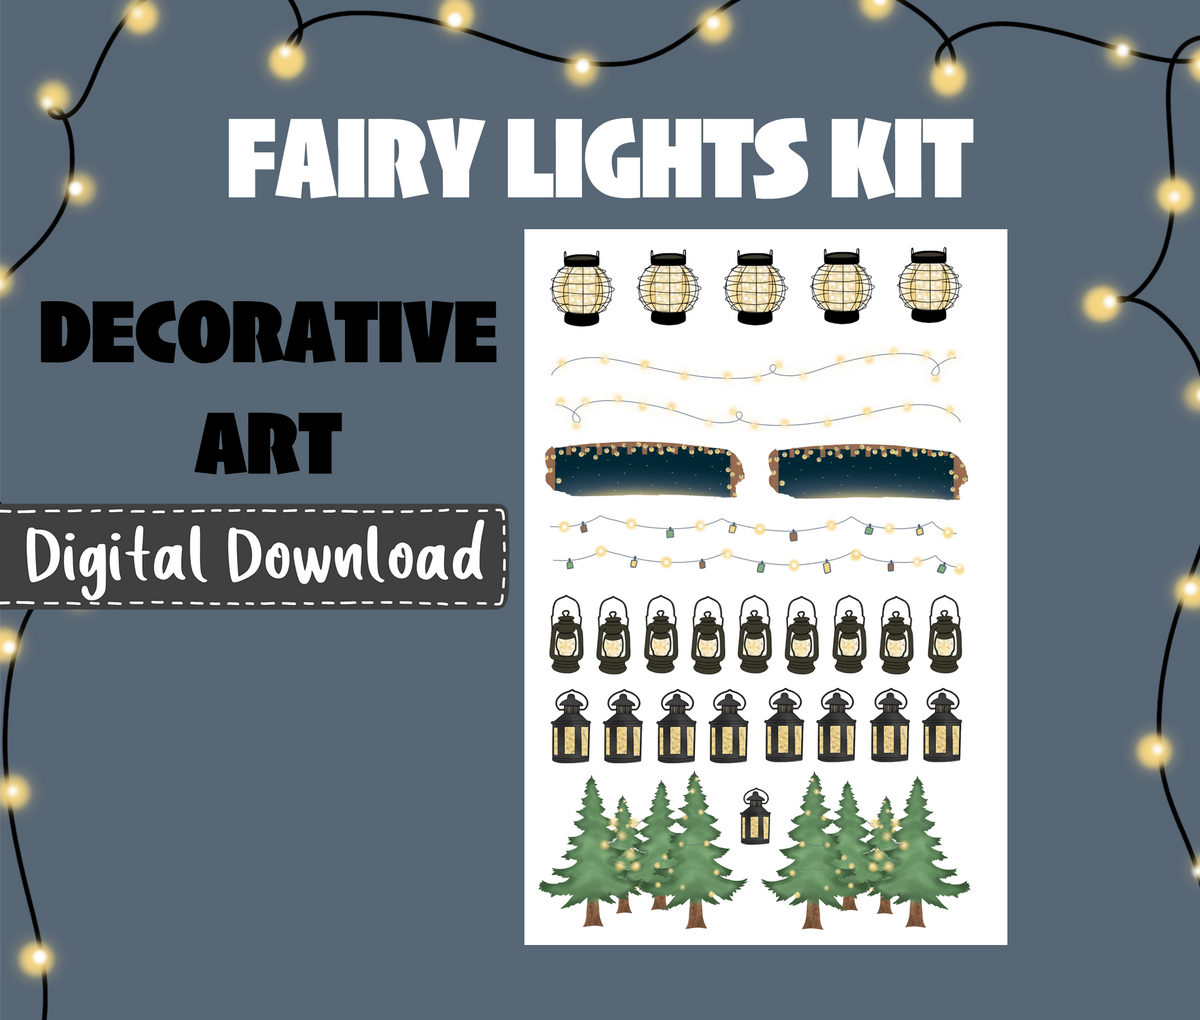 Dreamy Magic Lofi Mini Journaling Kit – Bear Necessities Sticker Co.